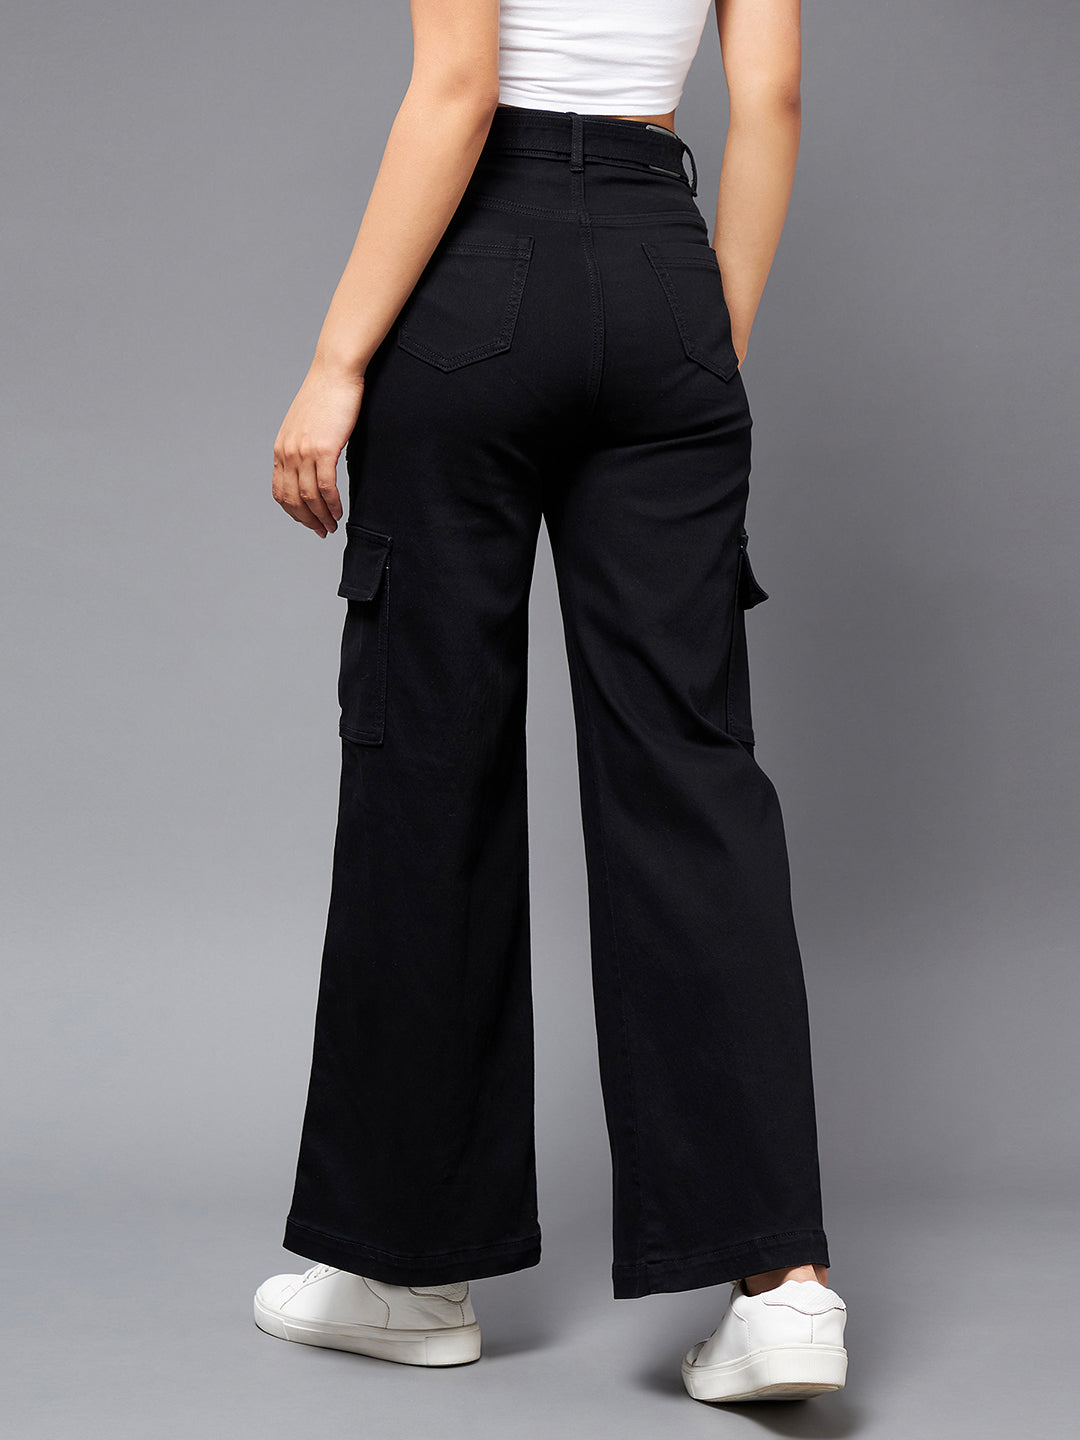 Women's Black Wide leg Cargo High rise Clean look Regular Stretchable Denim Jeans